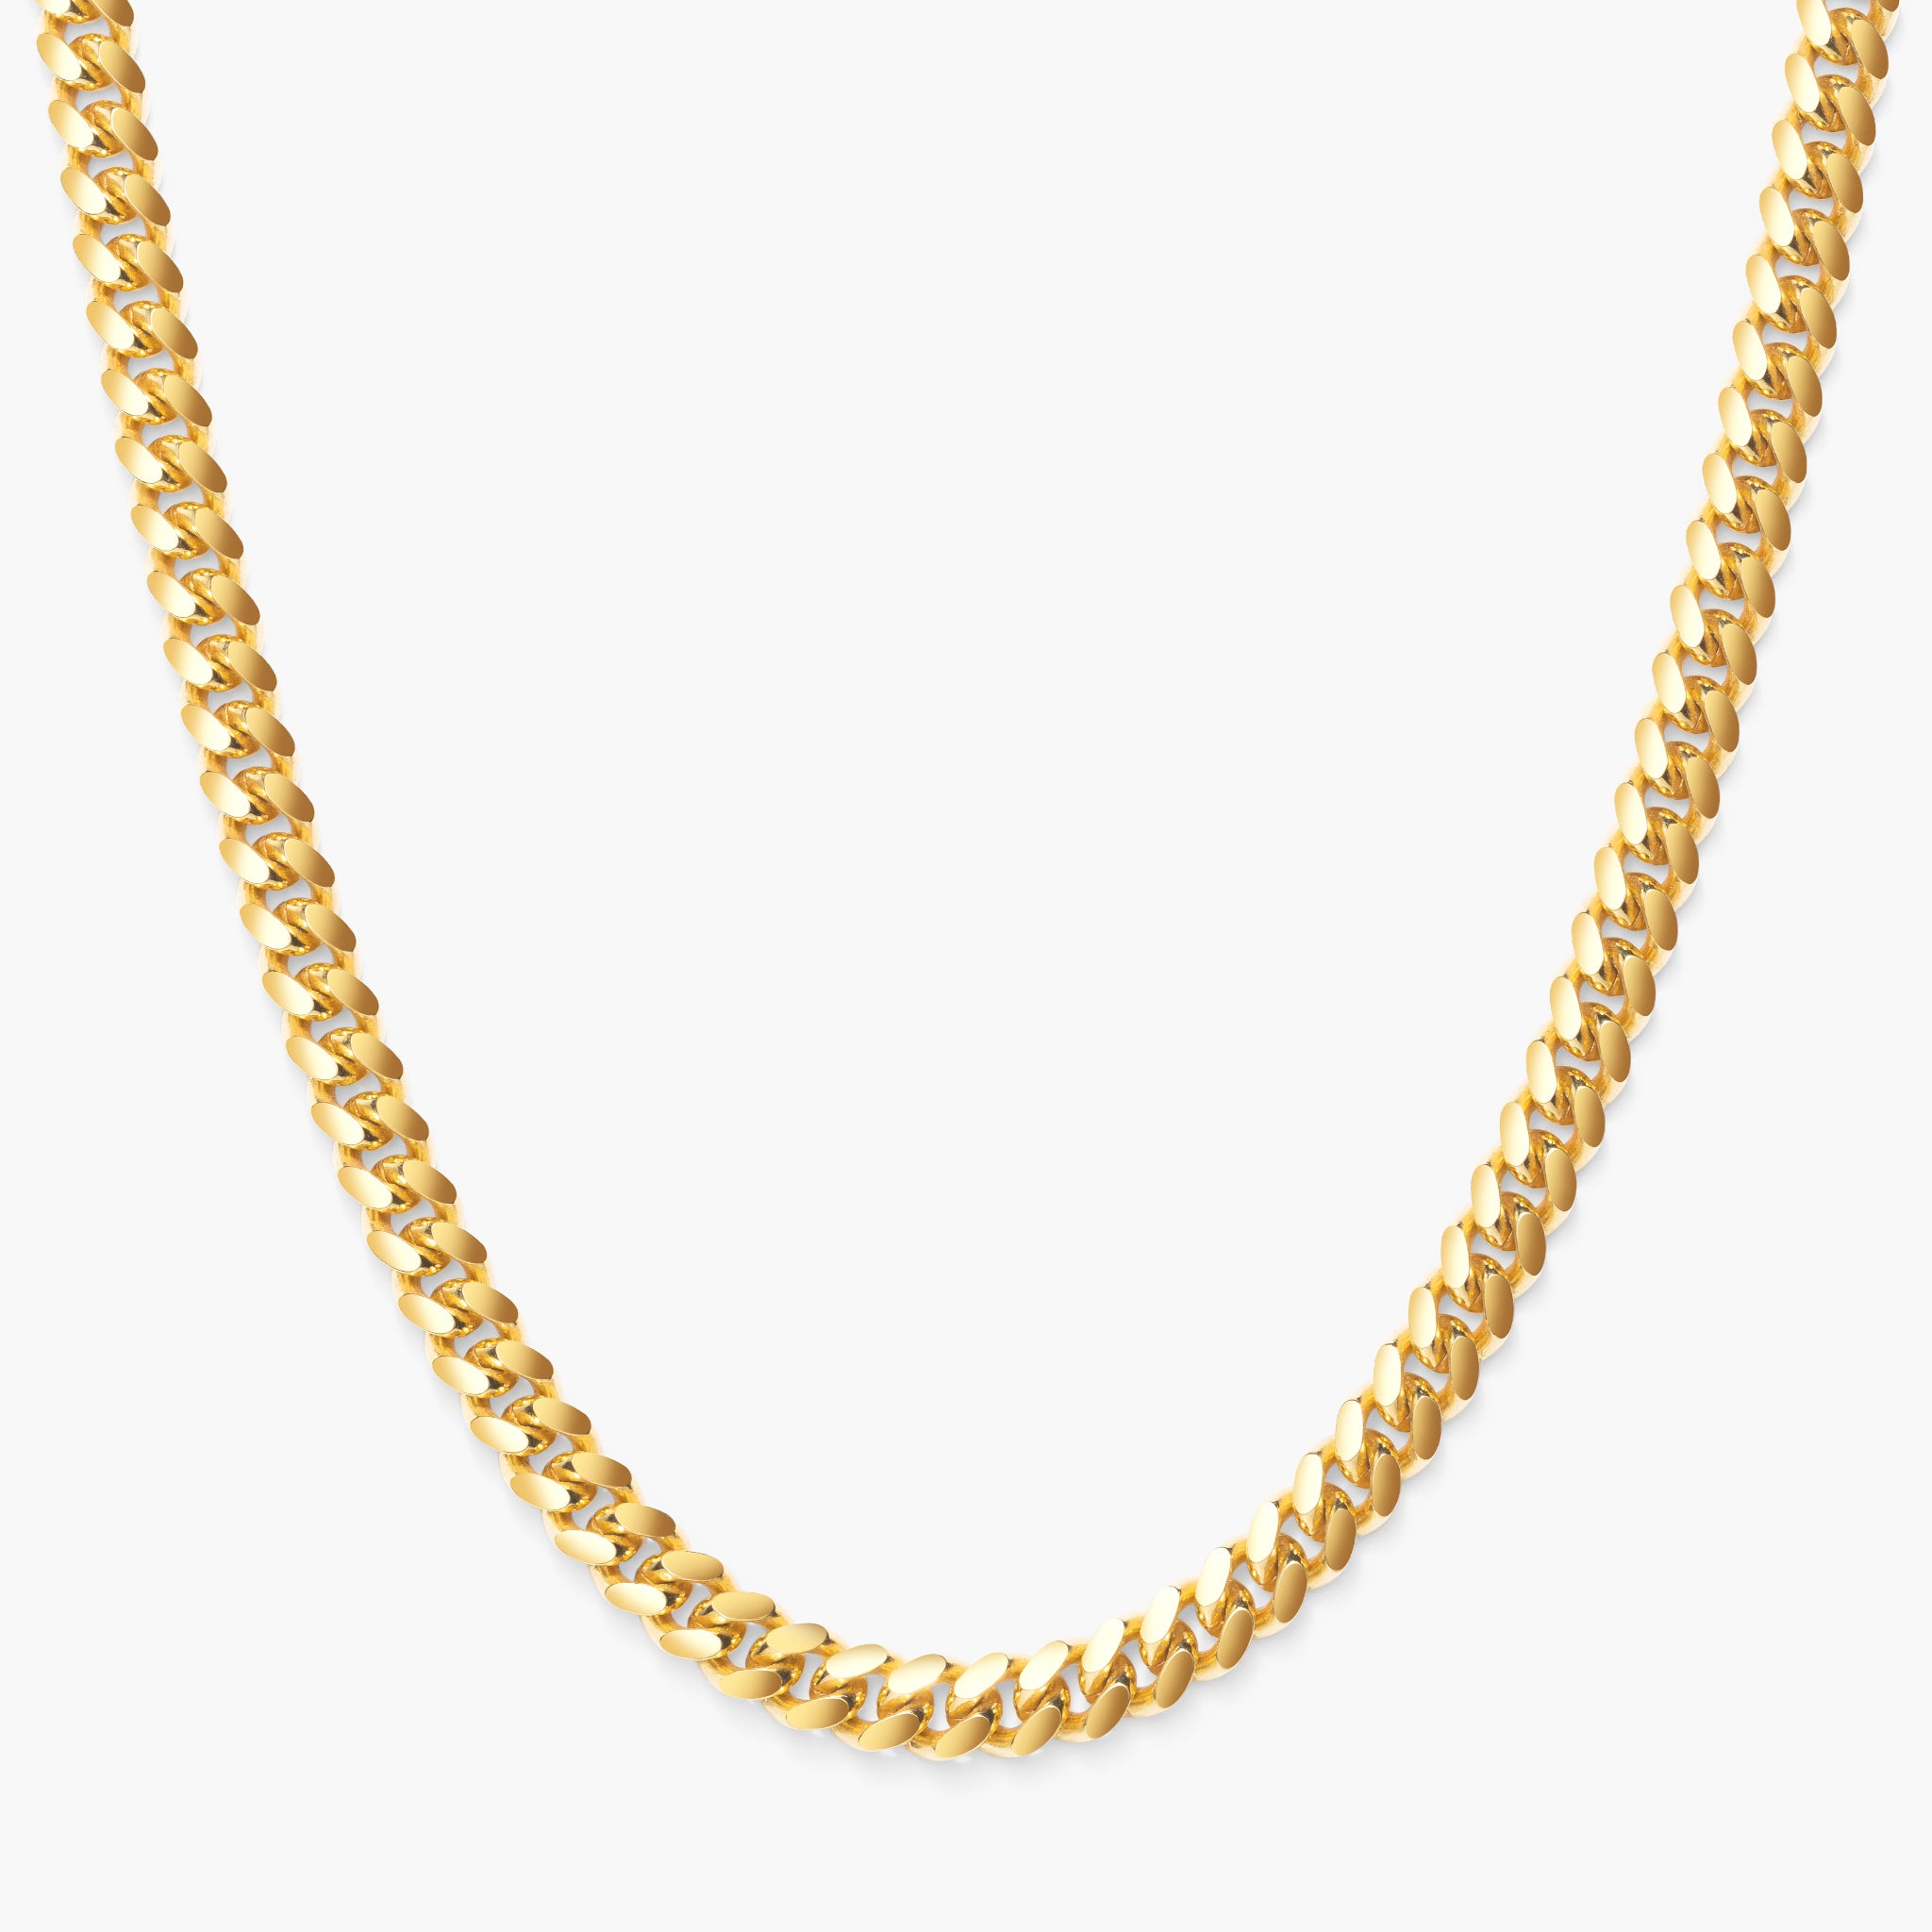 JAXXON Gold Avenue Cuff Bracelet | Size Medium/Large